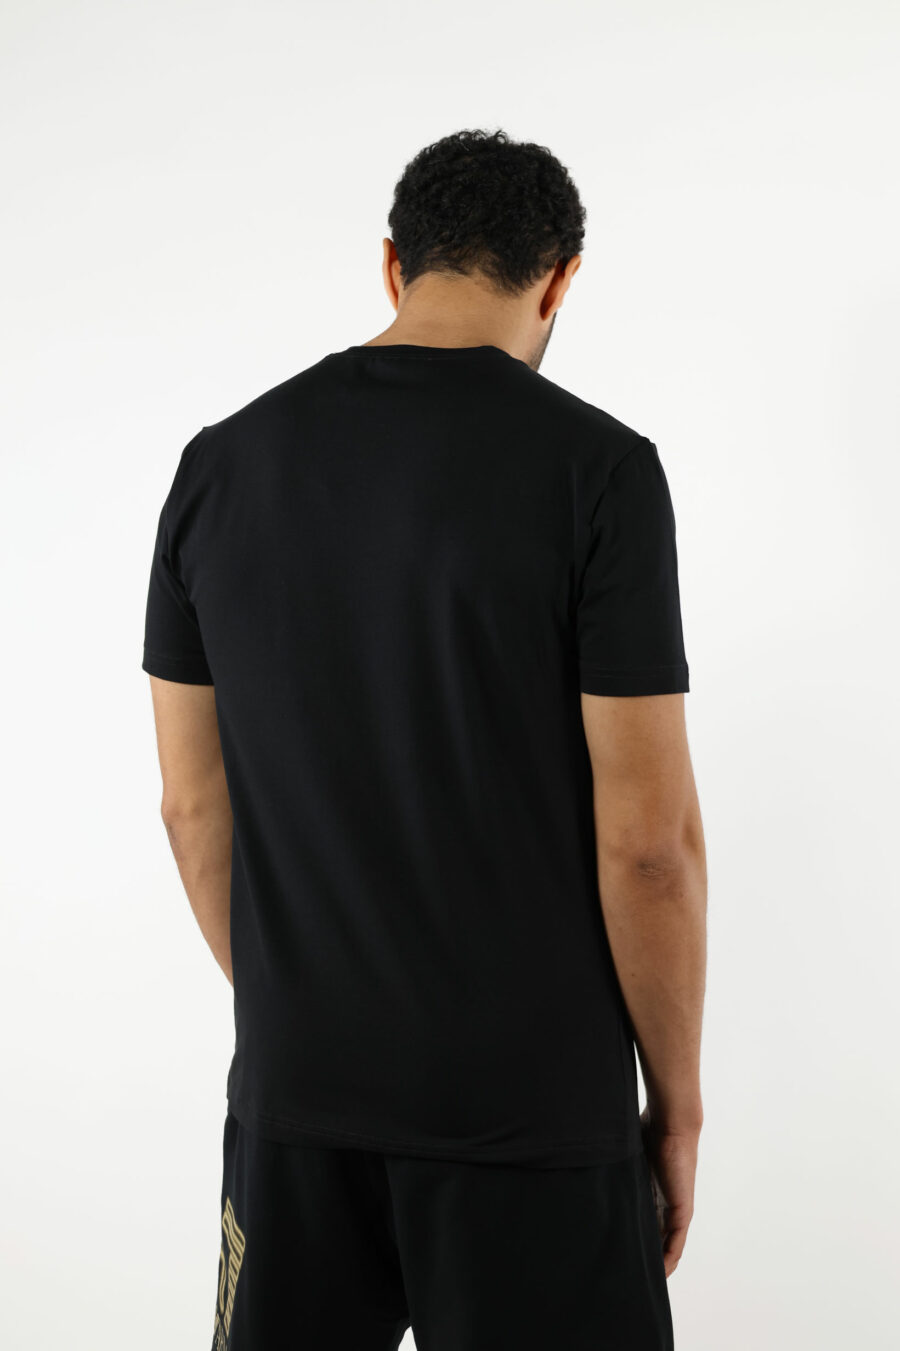 Schwarzes T-Shirt mit neongoldenem "lux identity" Maxilogo - 110904